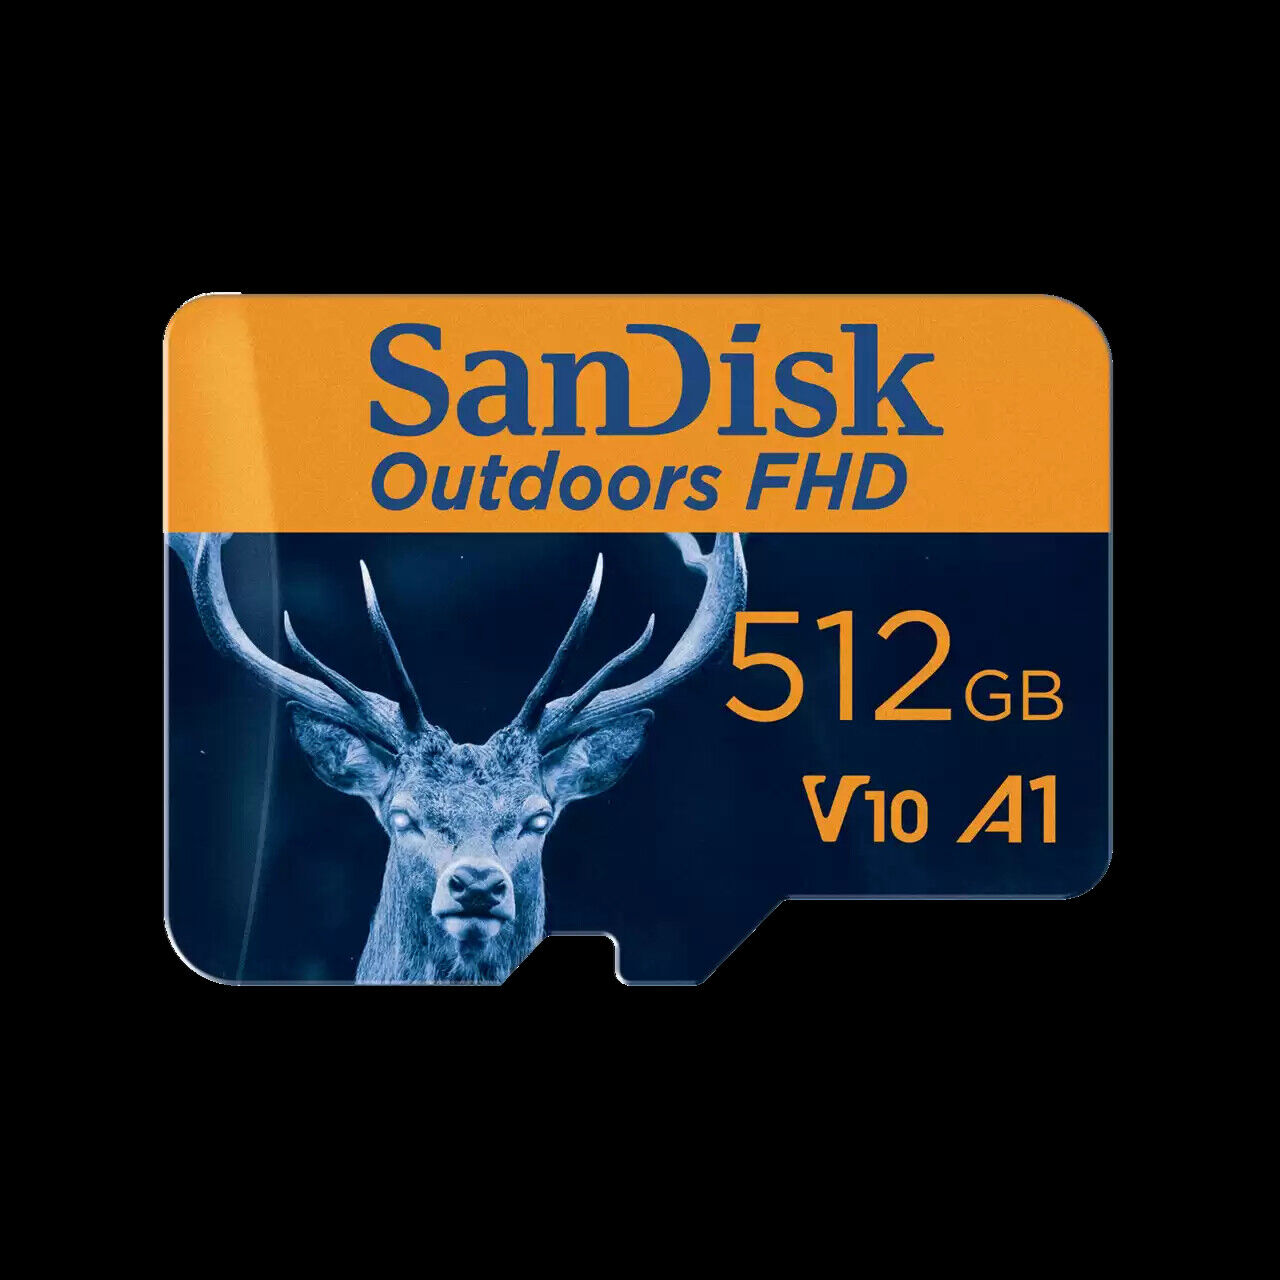 SanDisk 512GB Outdoors FHD microSDXC UHS-I Memory Card - SDSQUBL-512G-GN6VA